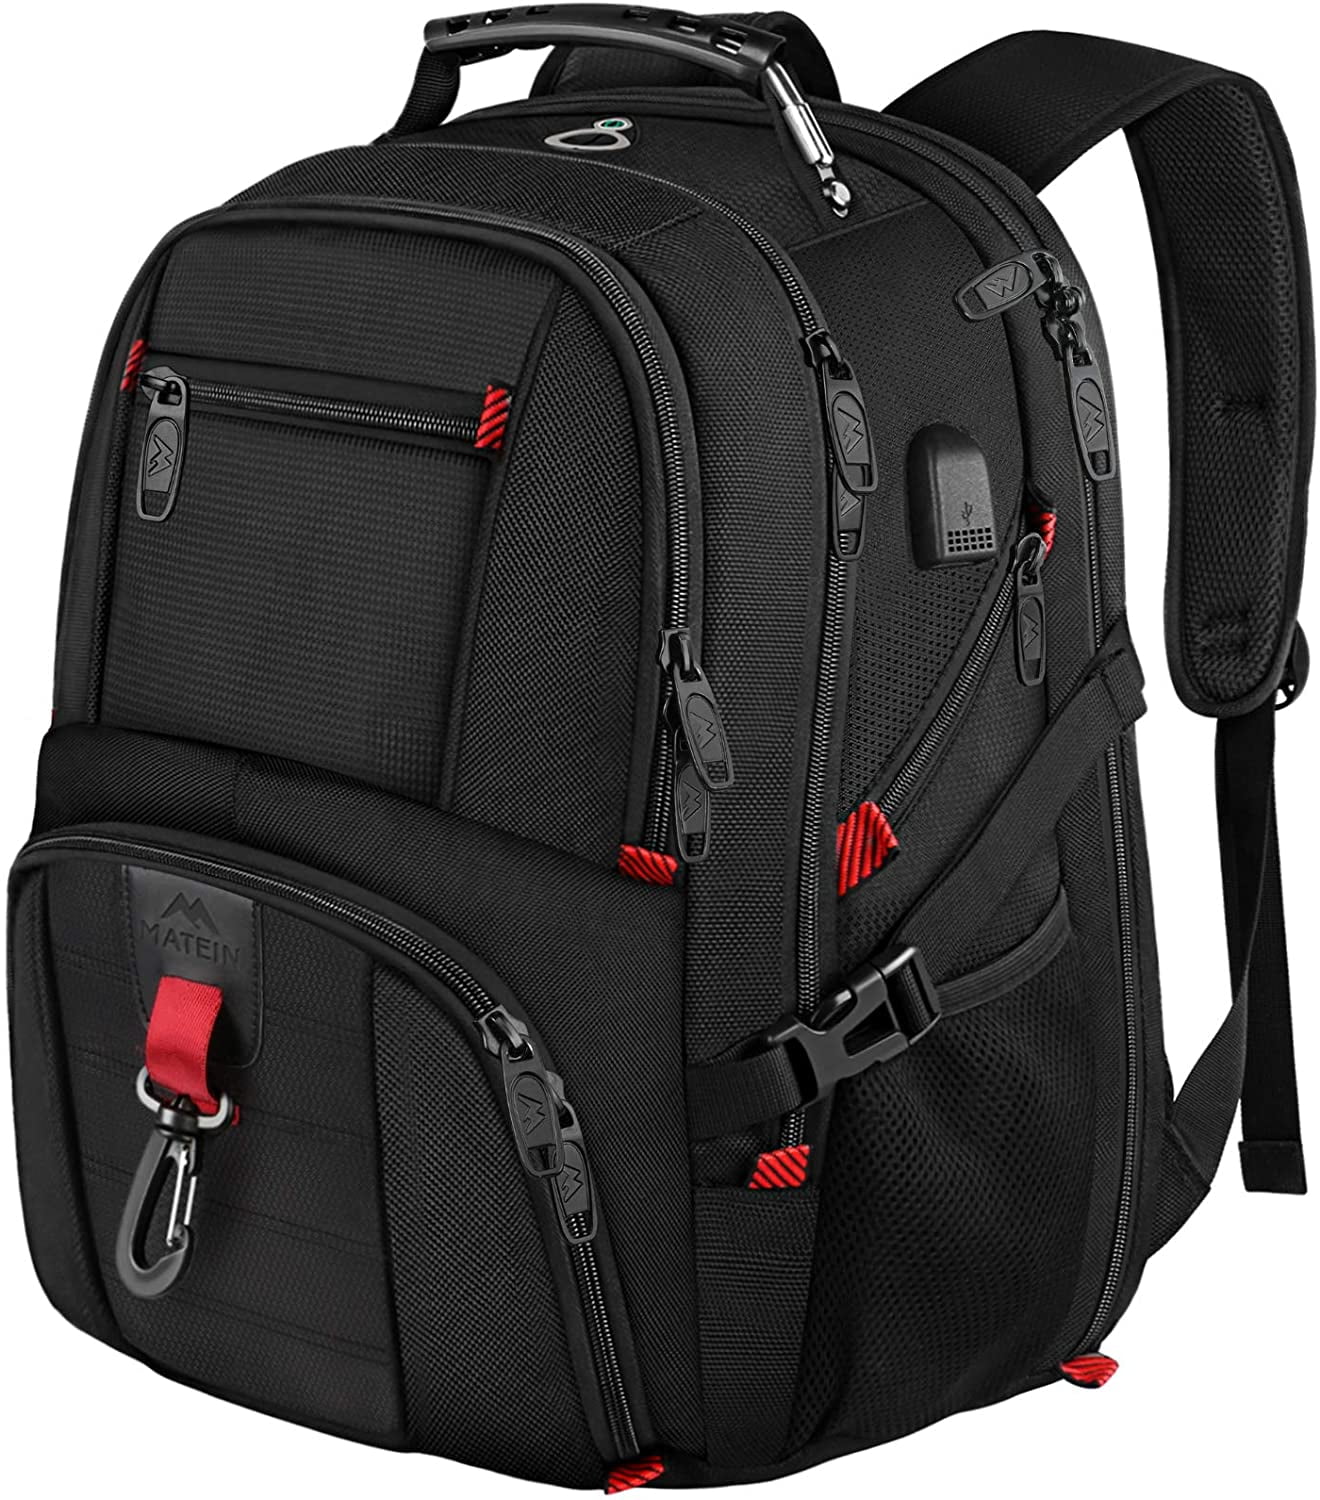 Yorepek Black 18 Inch TSA Friendly Laptop Backpack - Walmart.com